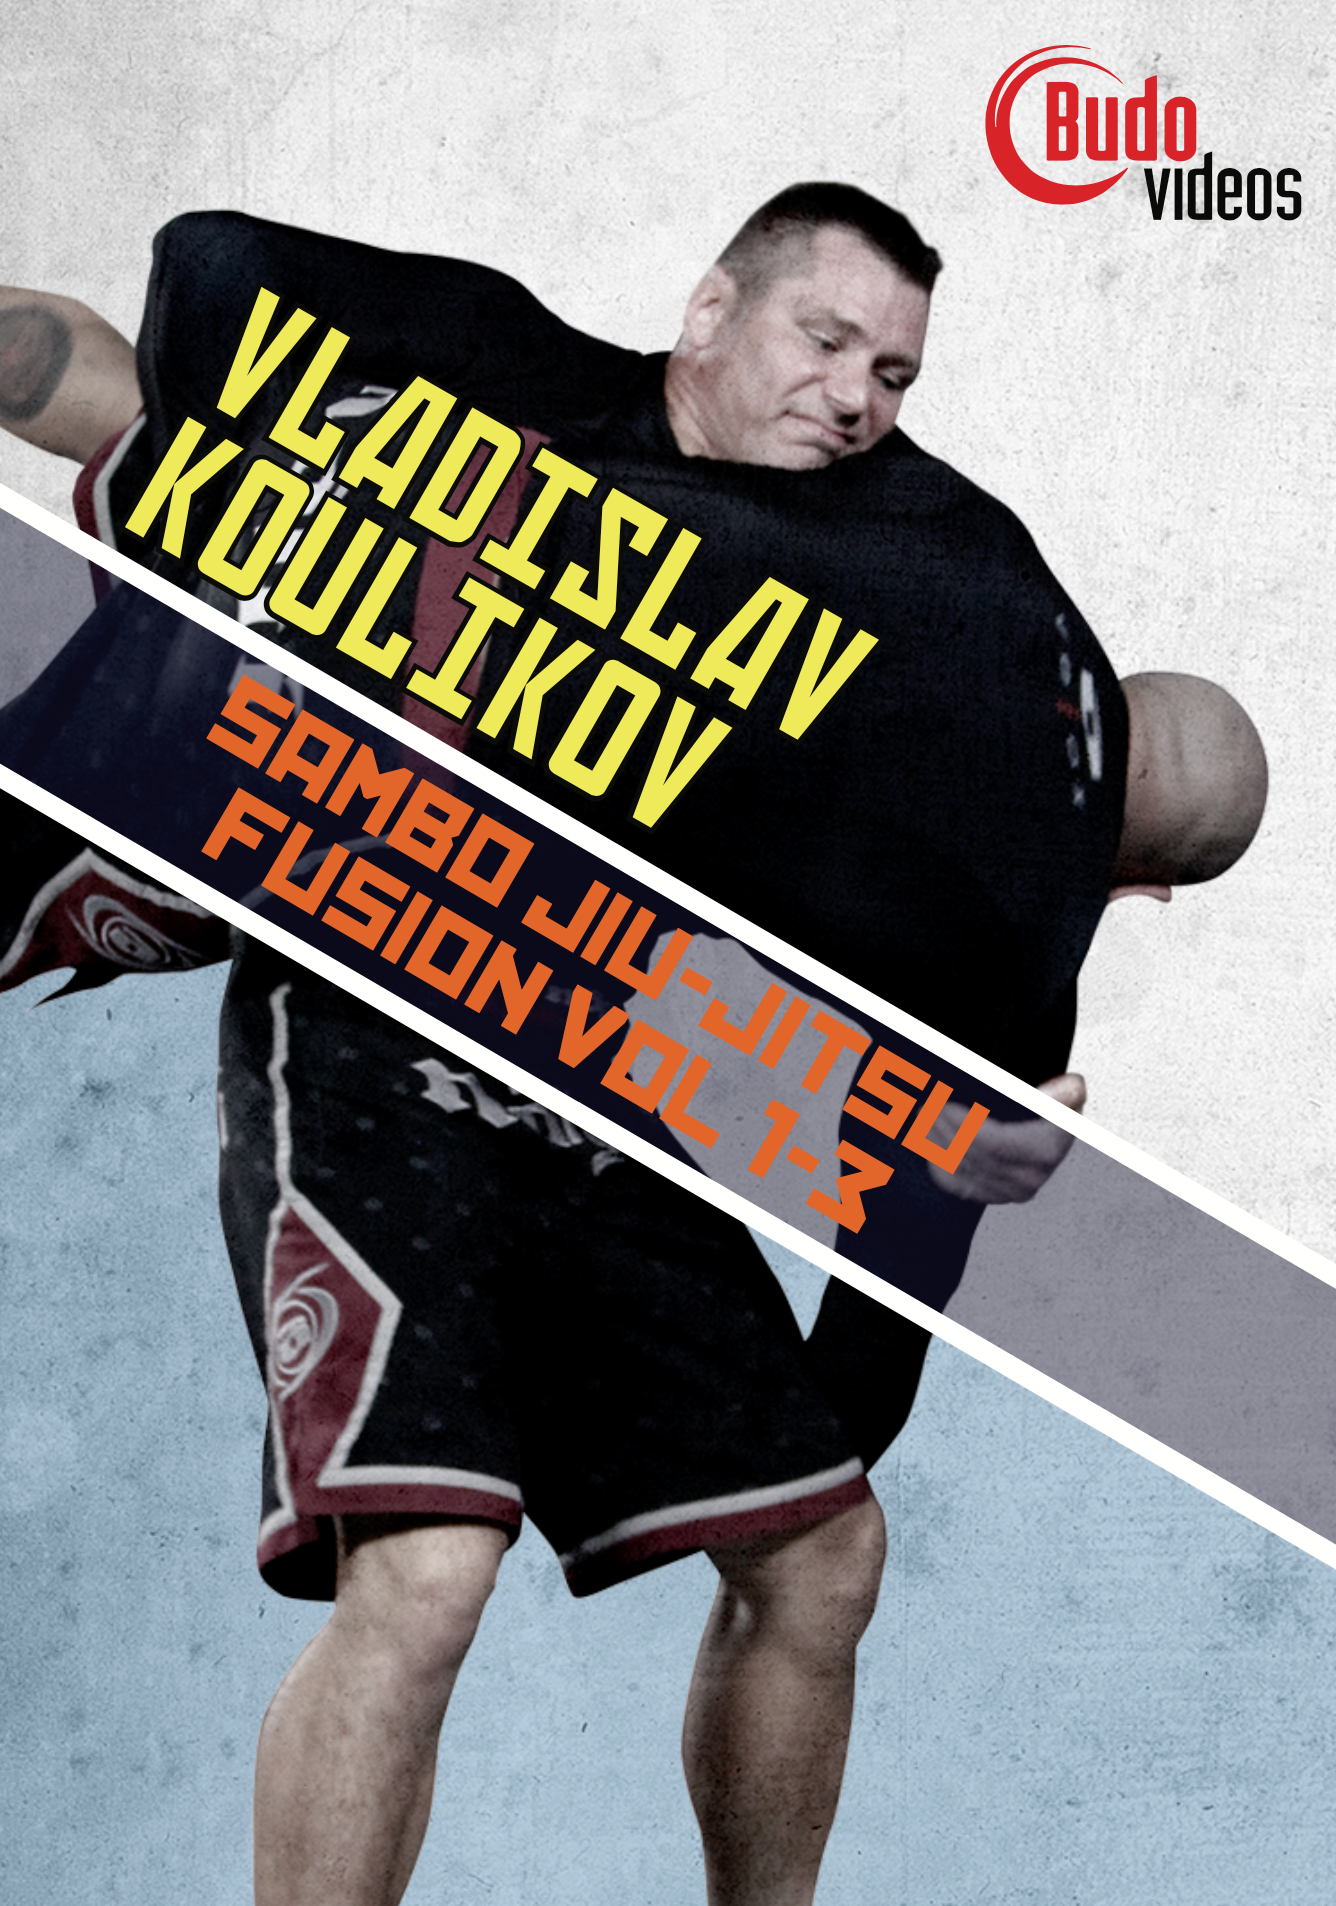 Juego de DVD Sambo Jiu-jitsu Fusion 3 de Vladislav Koulikov